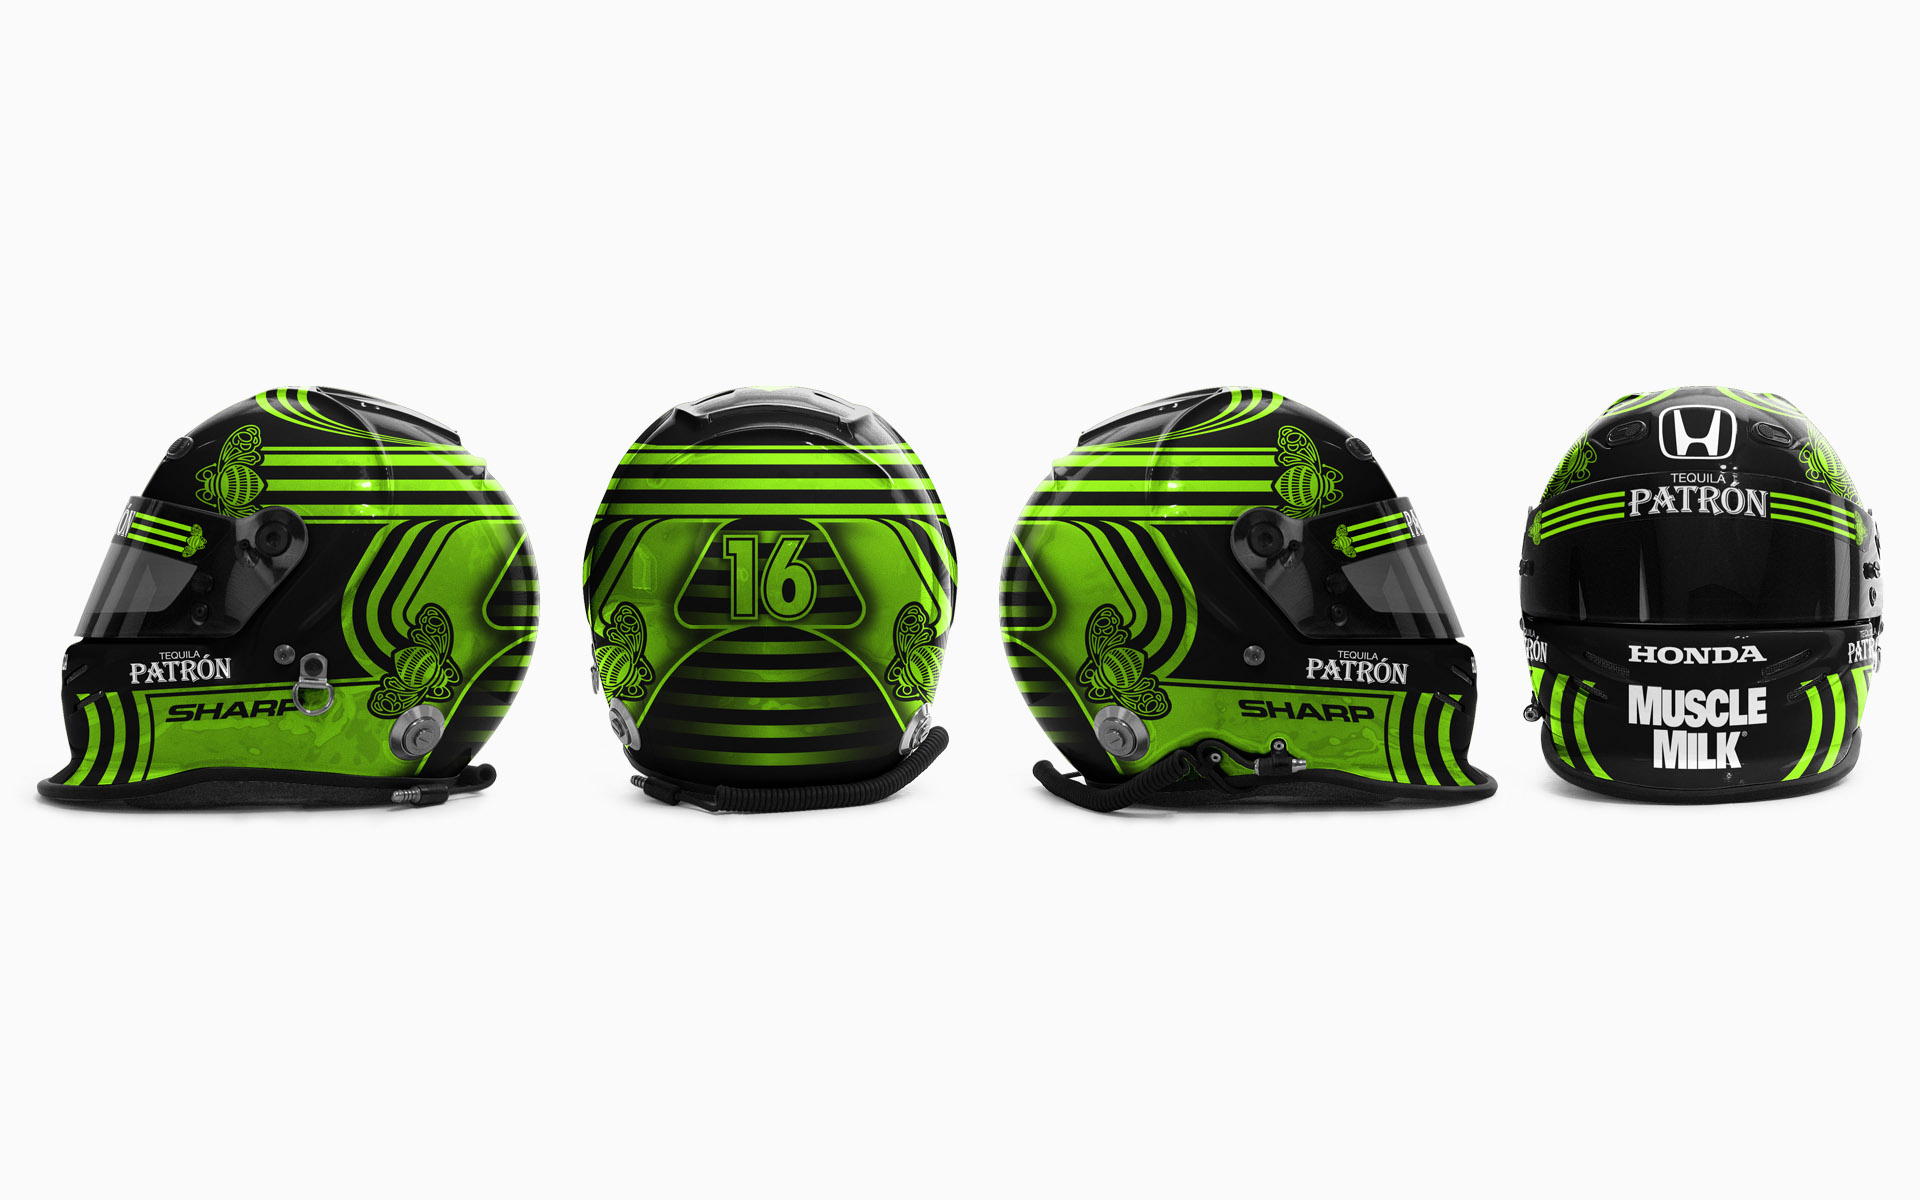 2009 Pu00e1tron Indy Racing Scott Sharp Helmet Livery Visualization